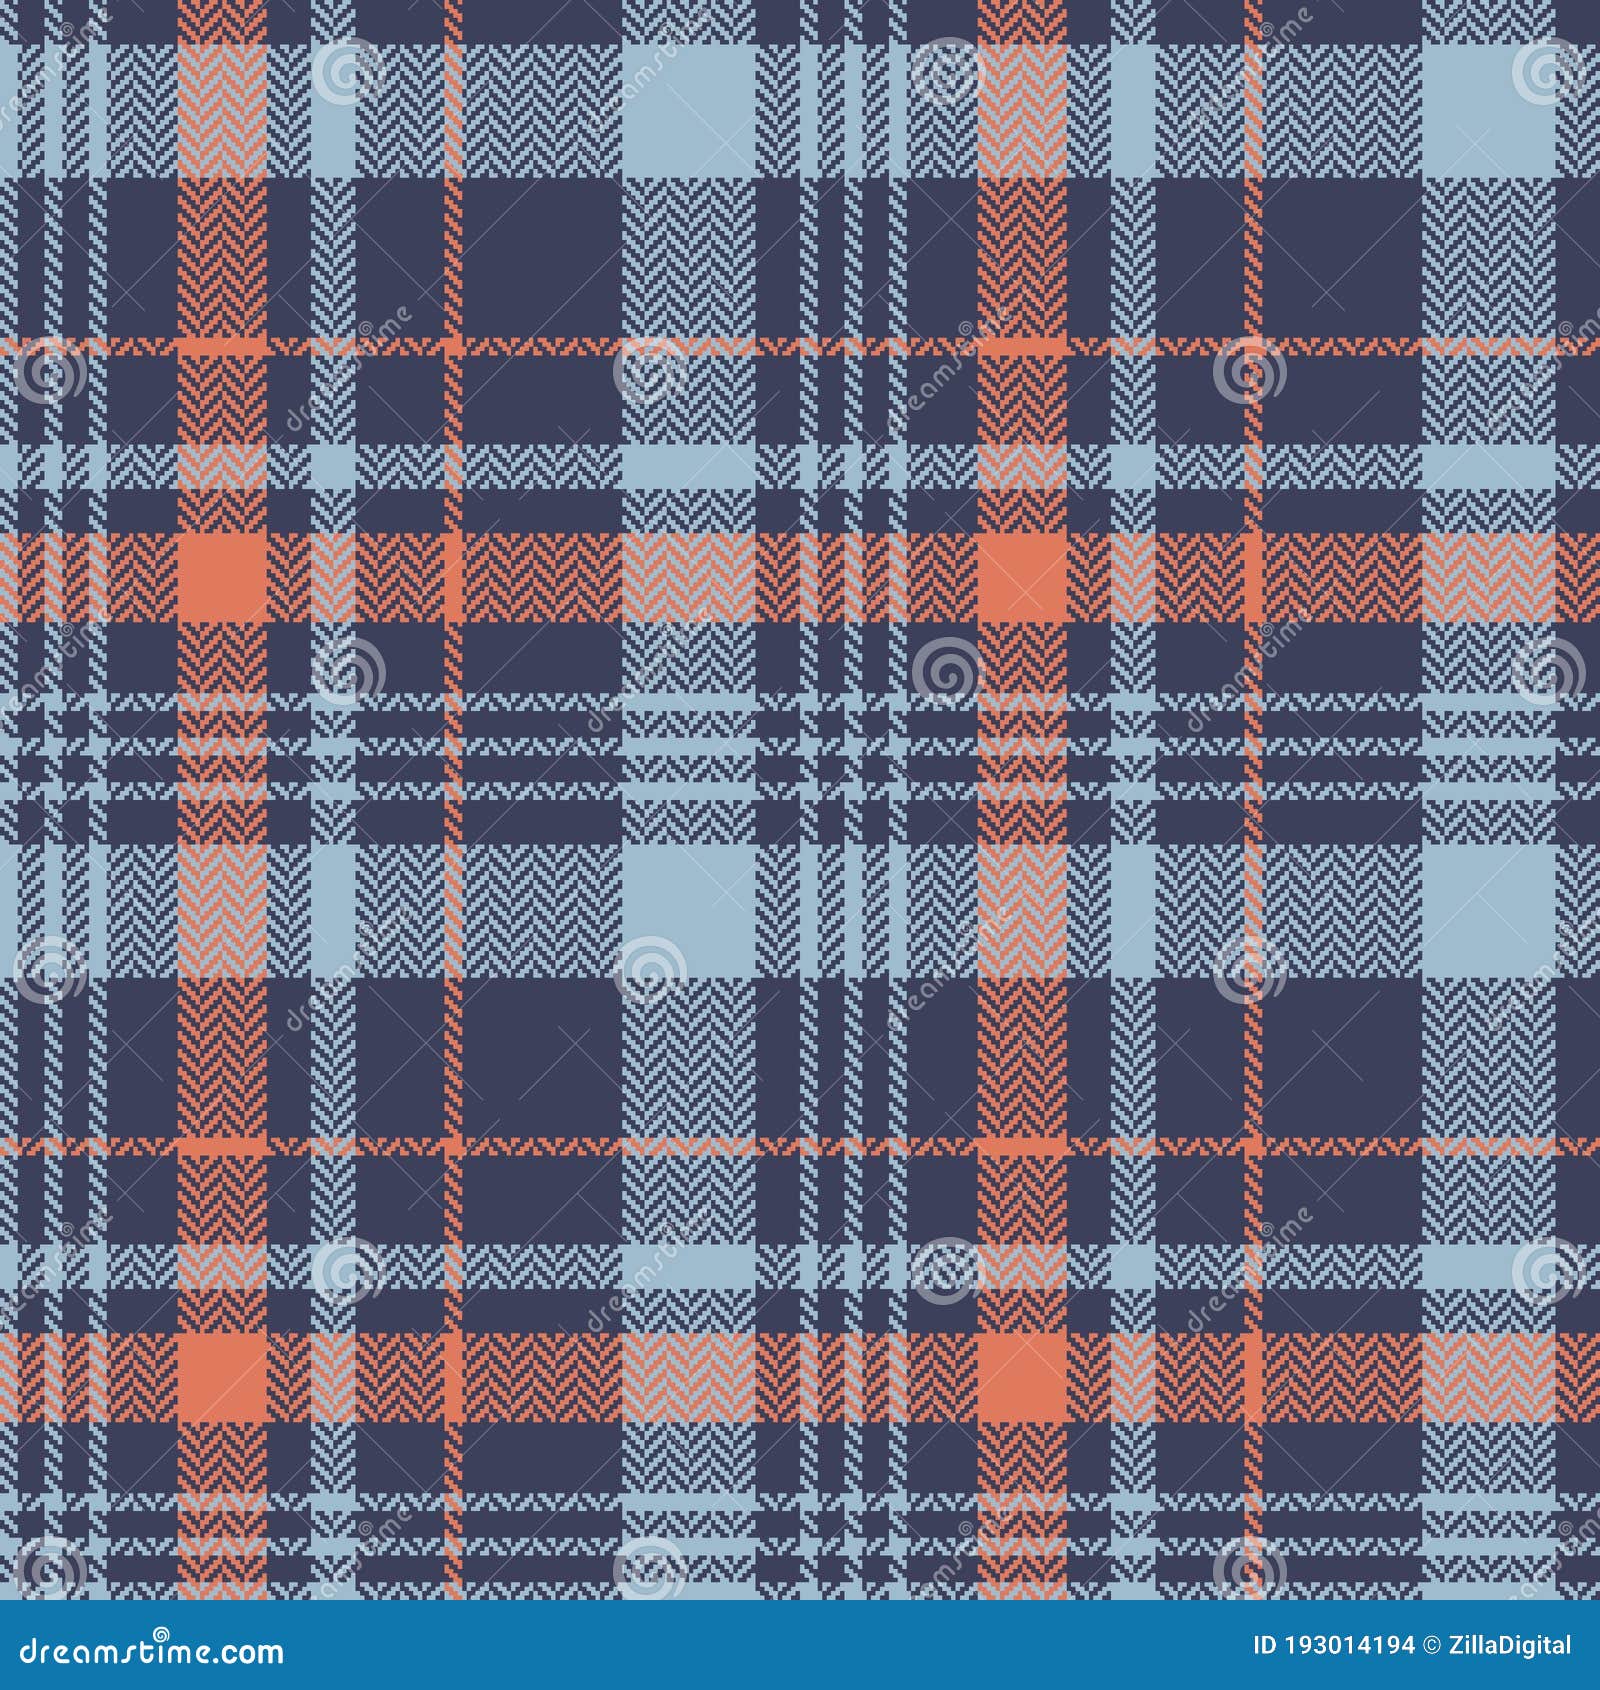 herringbone plaid pattern in blue and orange. tartan seamless check plaid for flannel shirt or other modern autumn print.